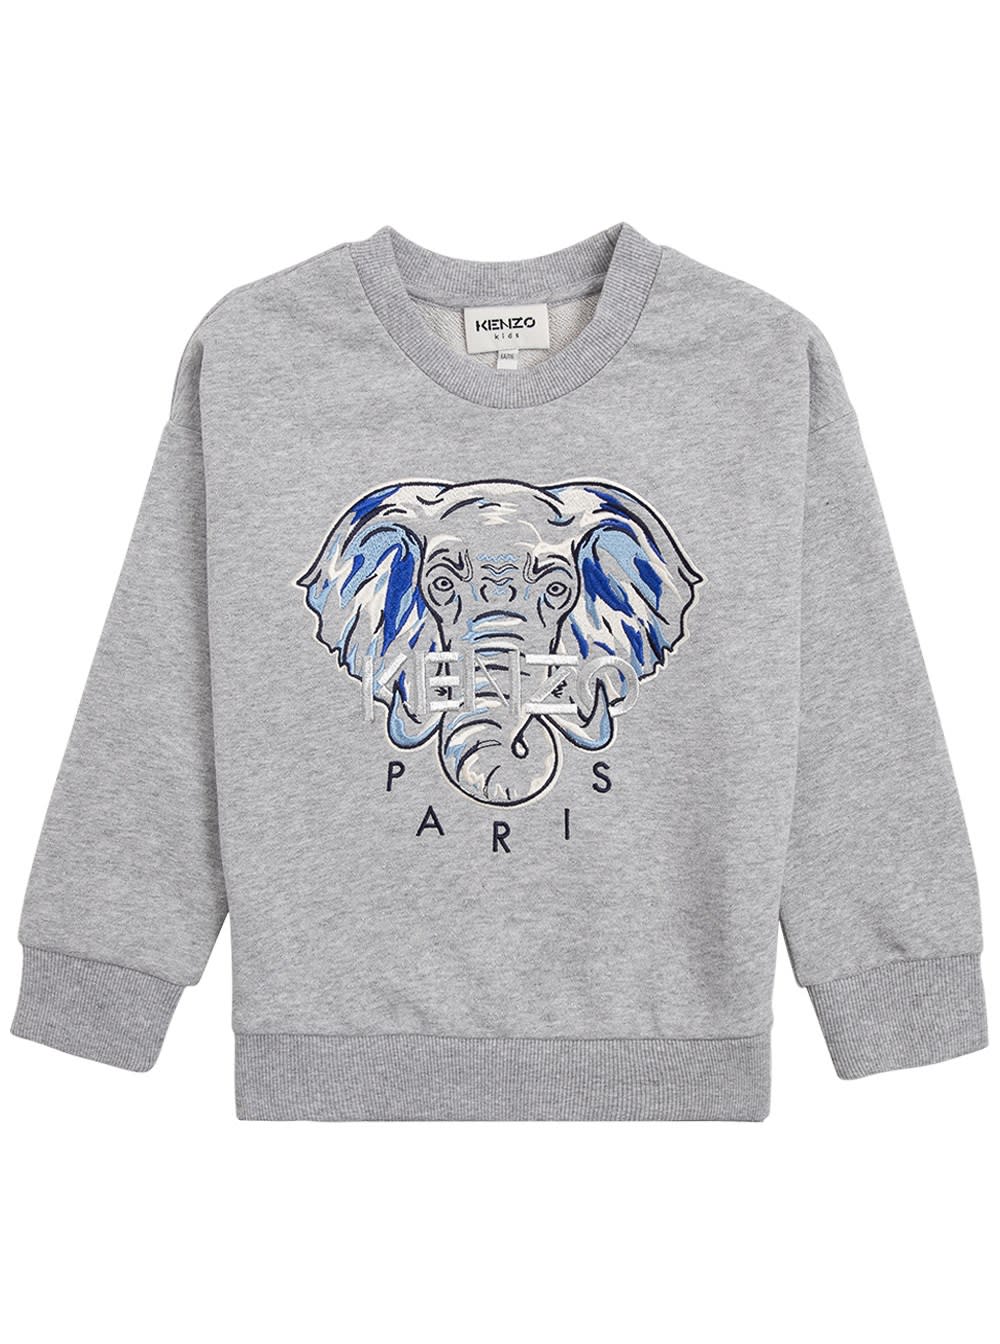 Kenzo Kids Grey Cotton Sweatshirt With Print